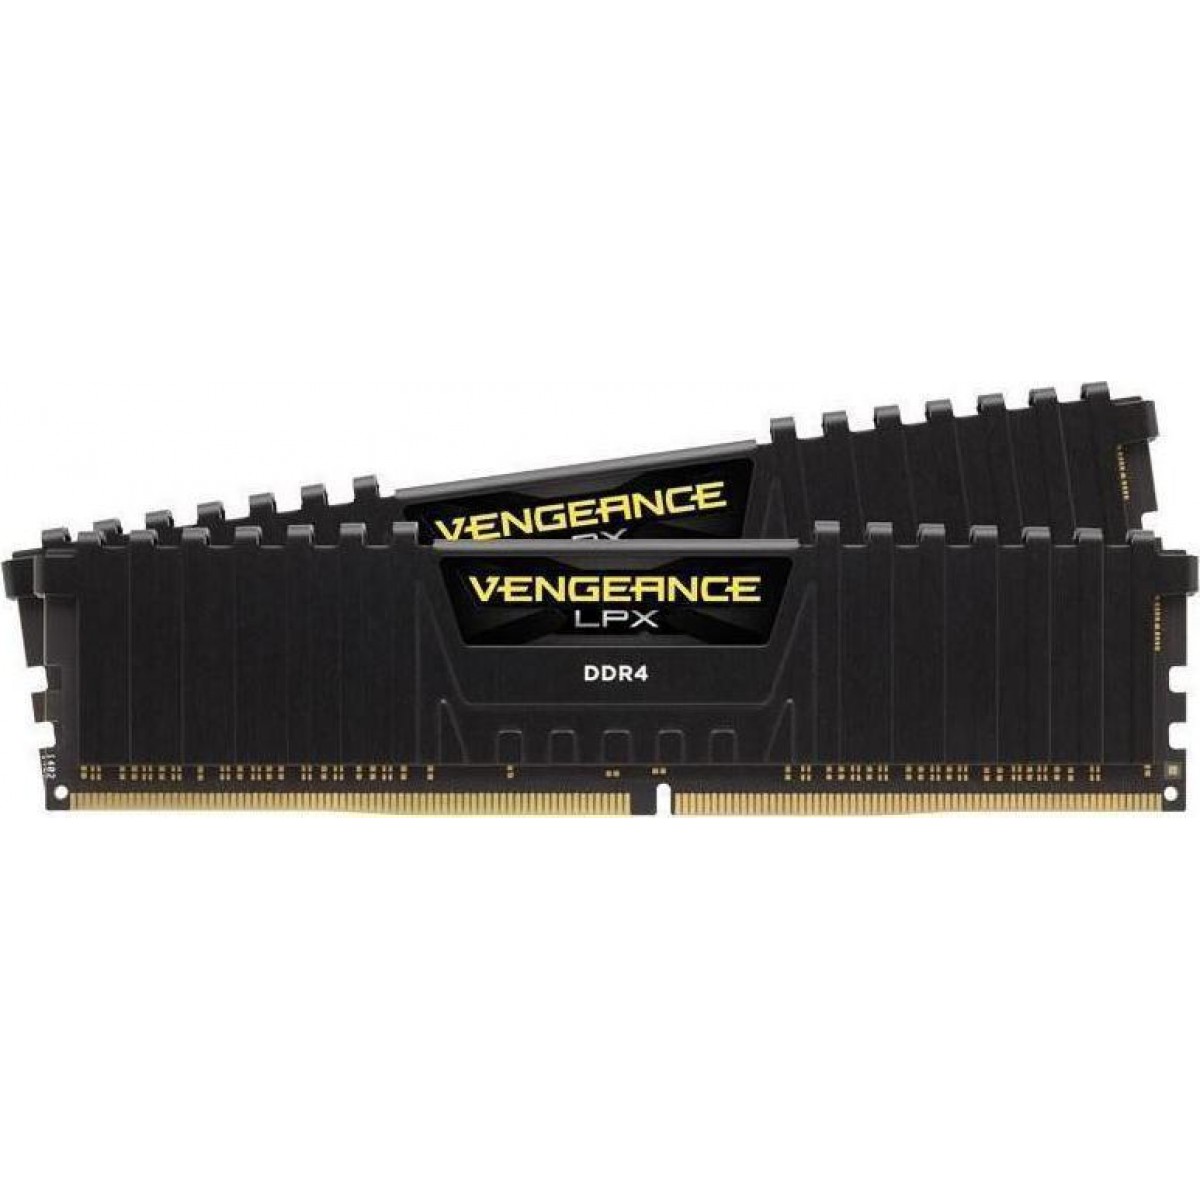 RAM CORSAIR VEGEANCE LPX 16GB 2x8 DDR4 3000MHz CMK16GX4M2B3000C15